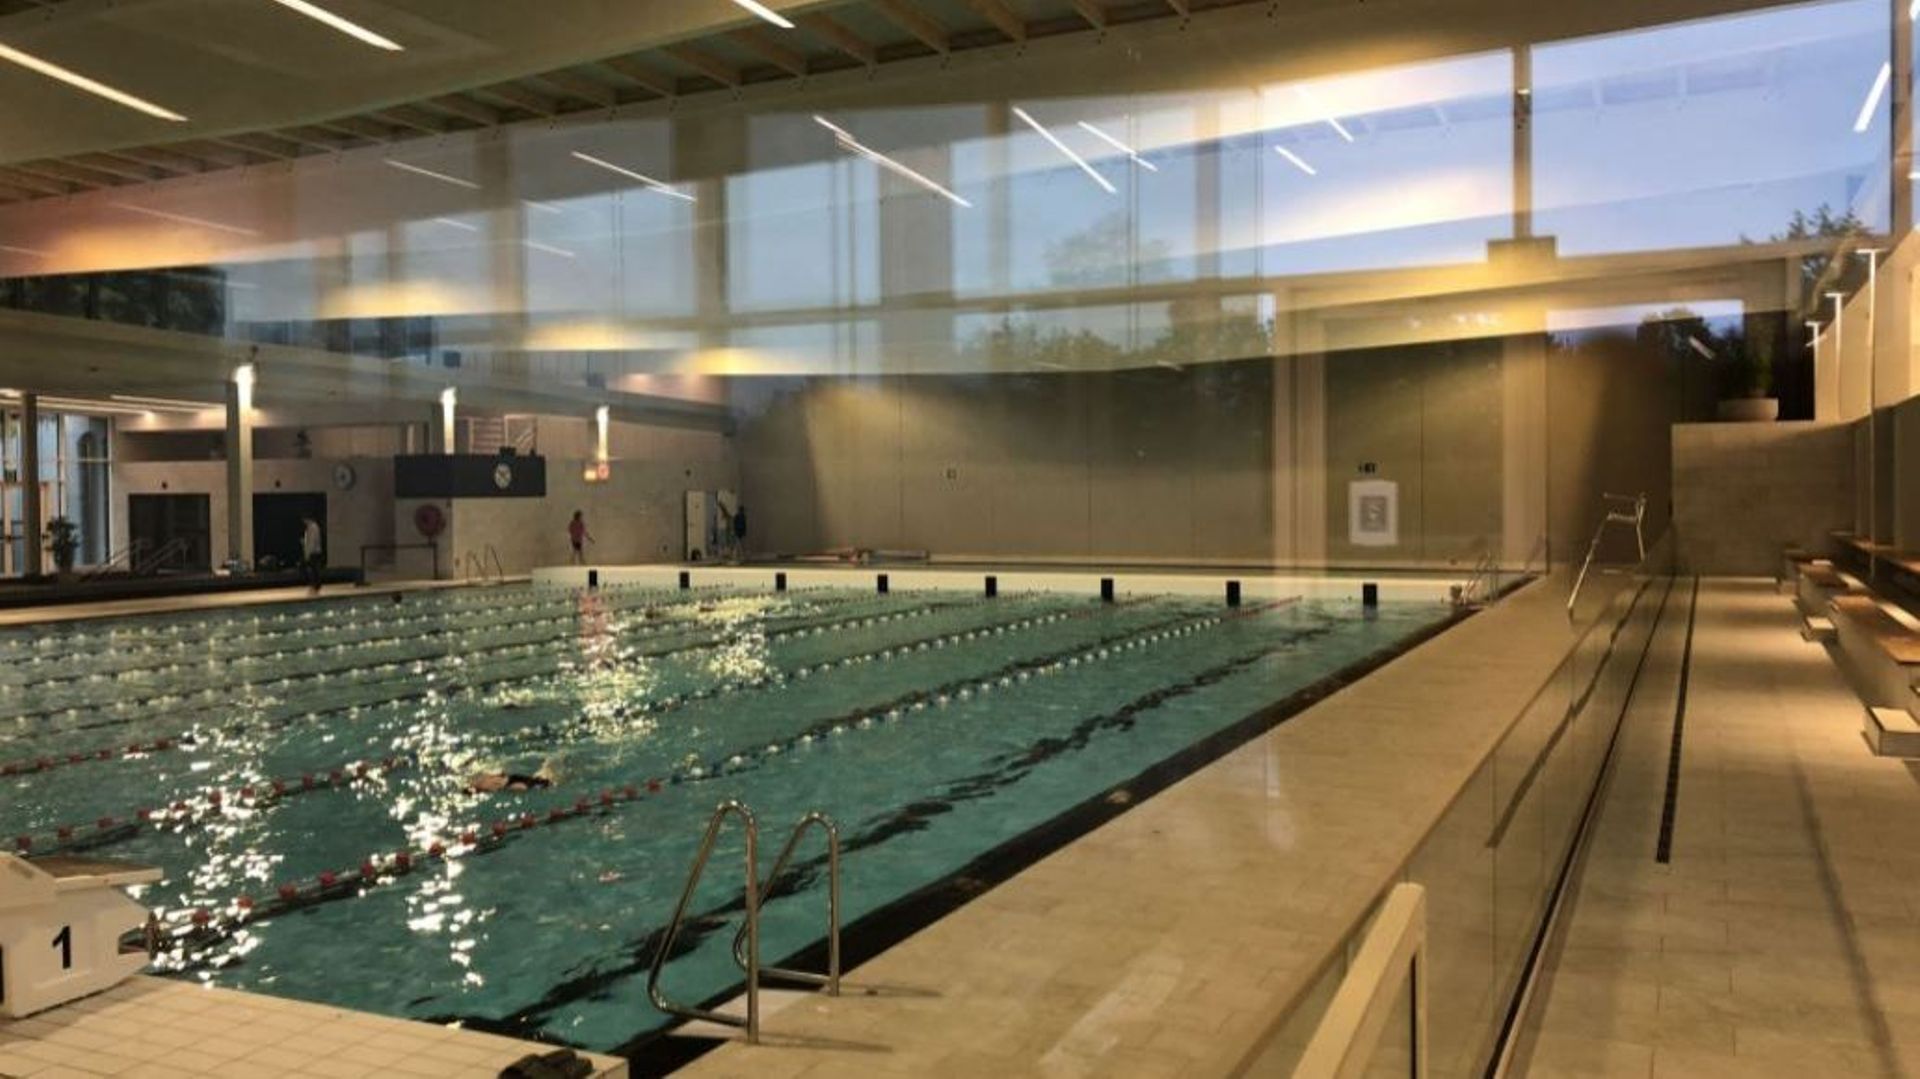 La piscine de Braine L'Alleud lors de son inauguration en octobre 2020